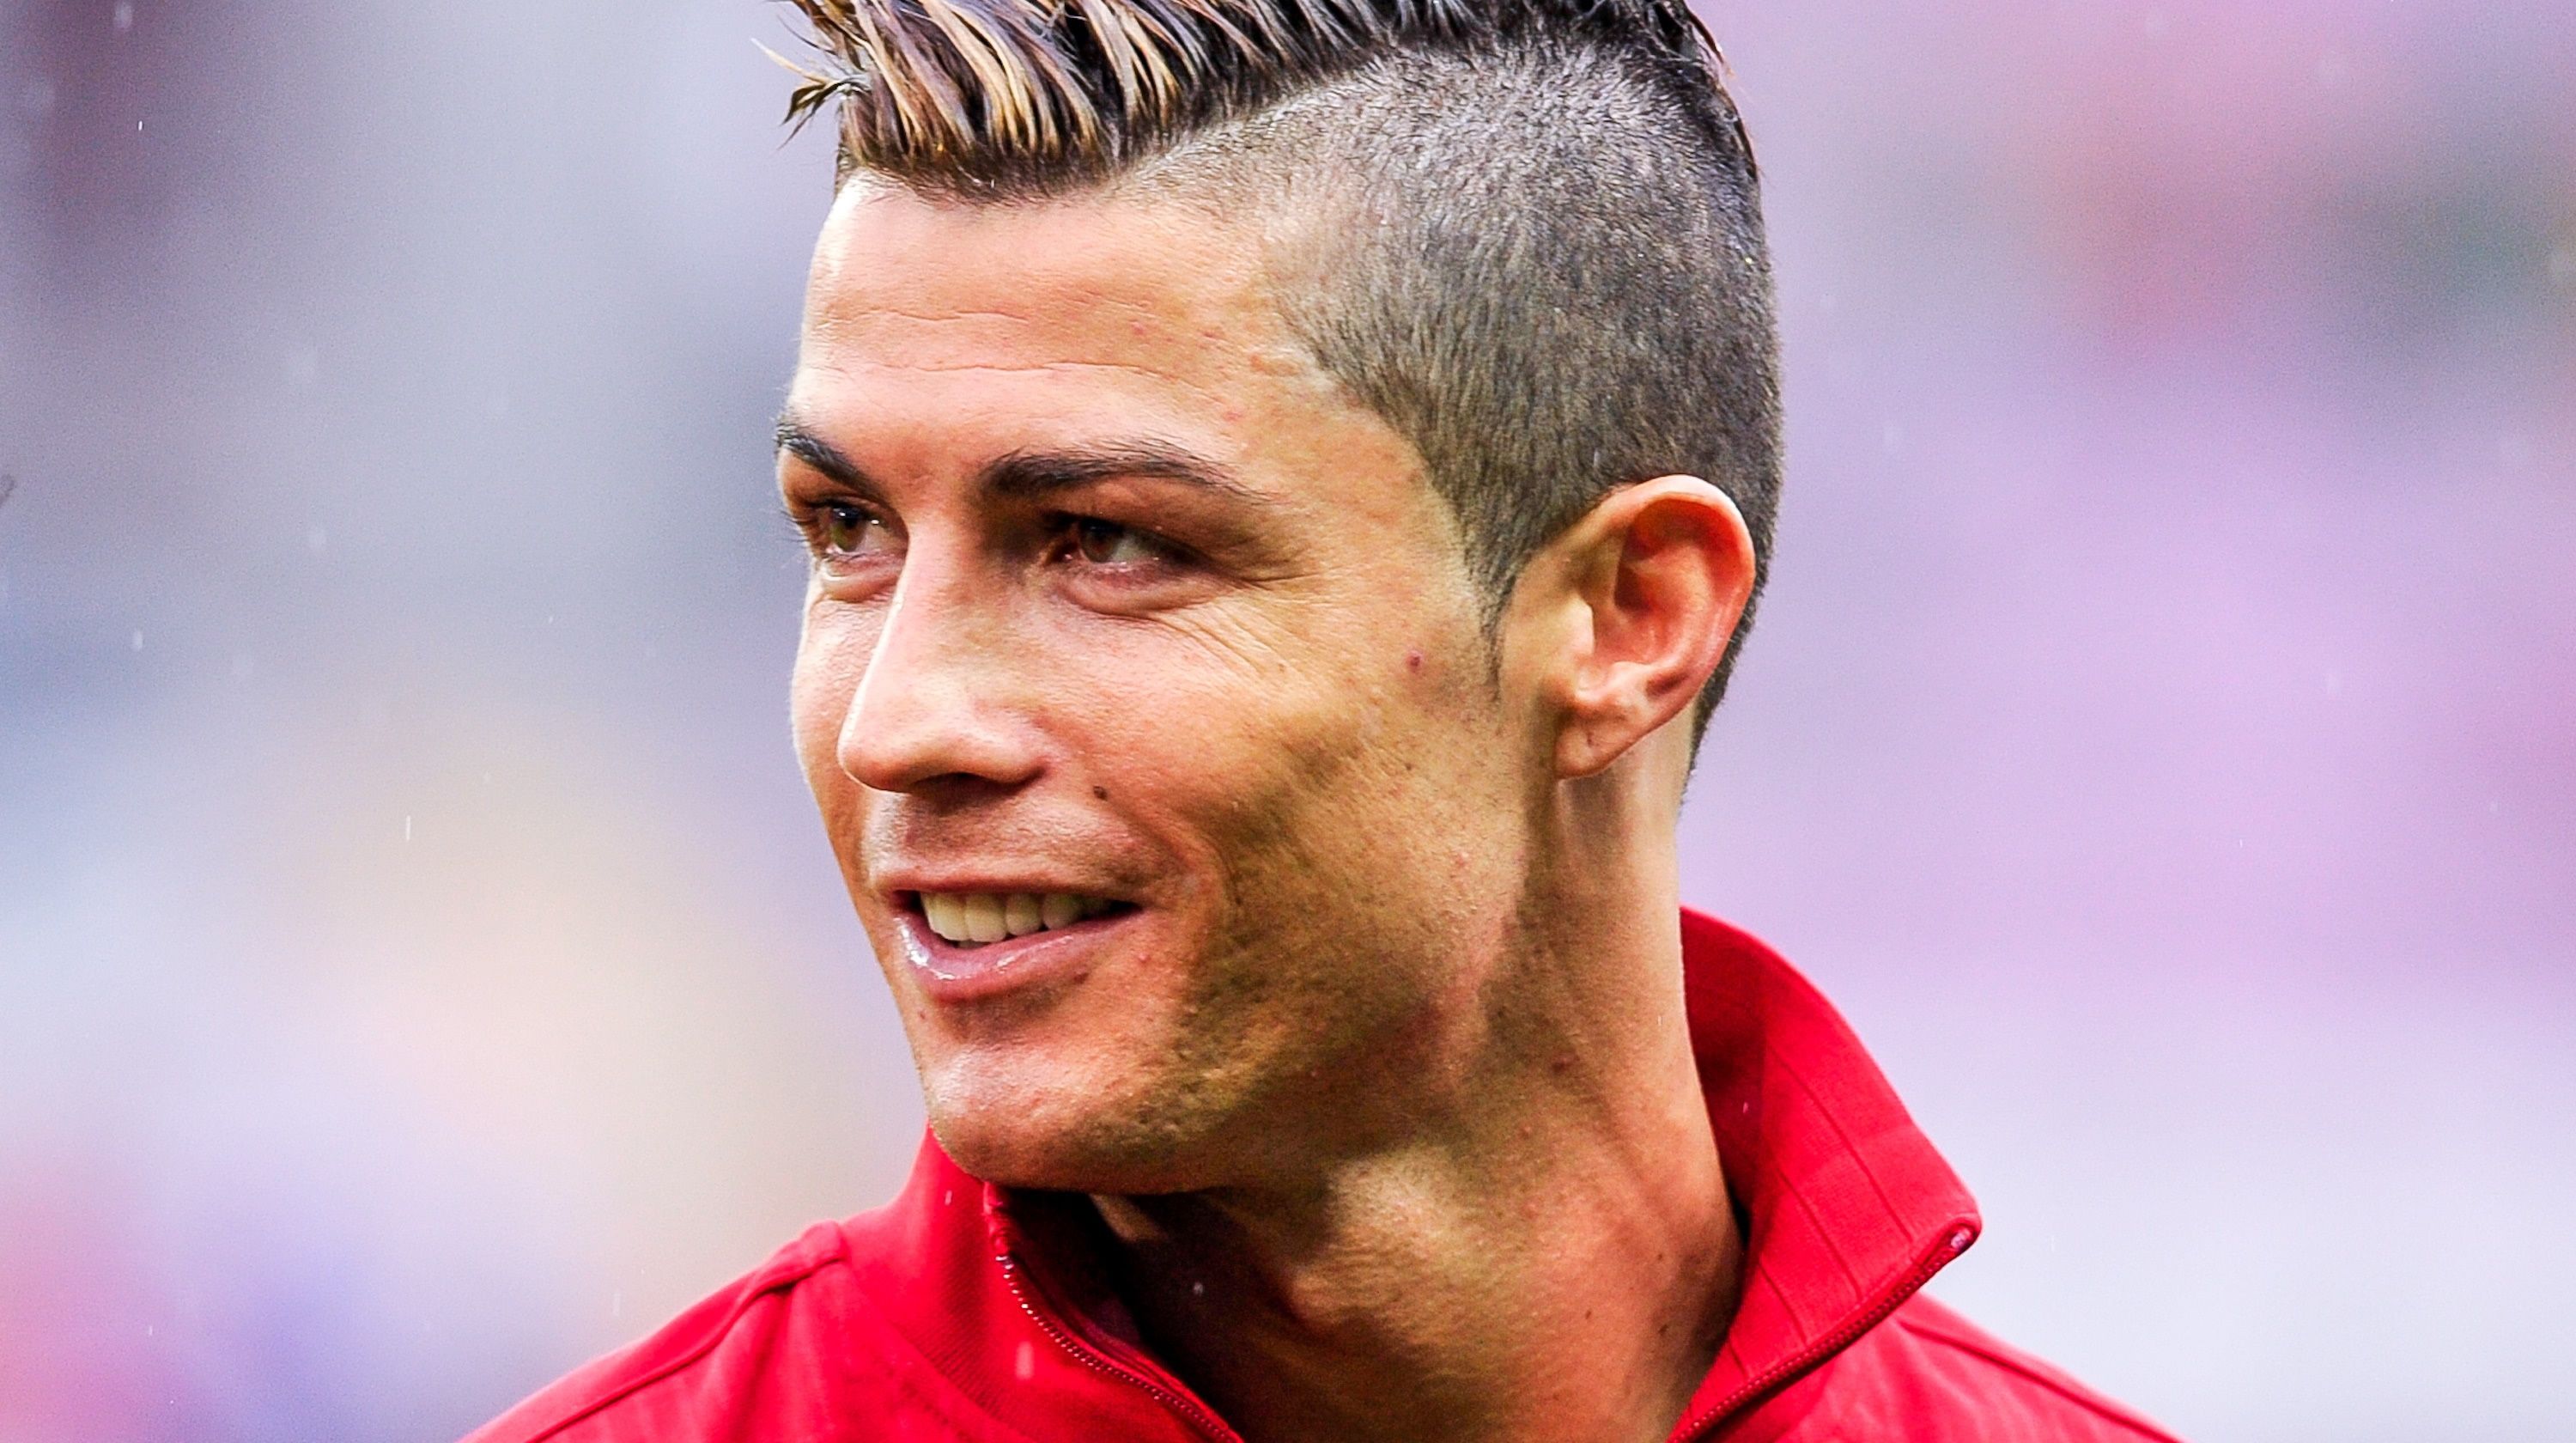 Cristiano Ronaldo 2014 haircut wallpaper - Cristiano Ronaldo ...